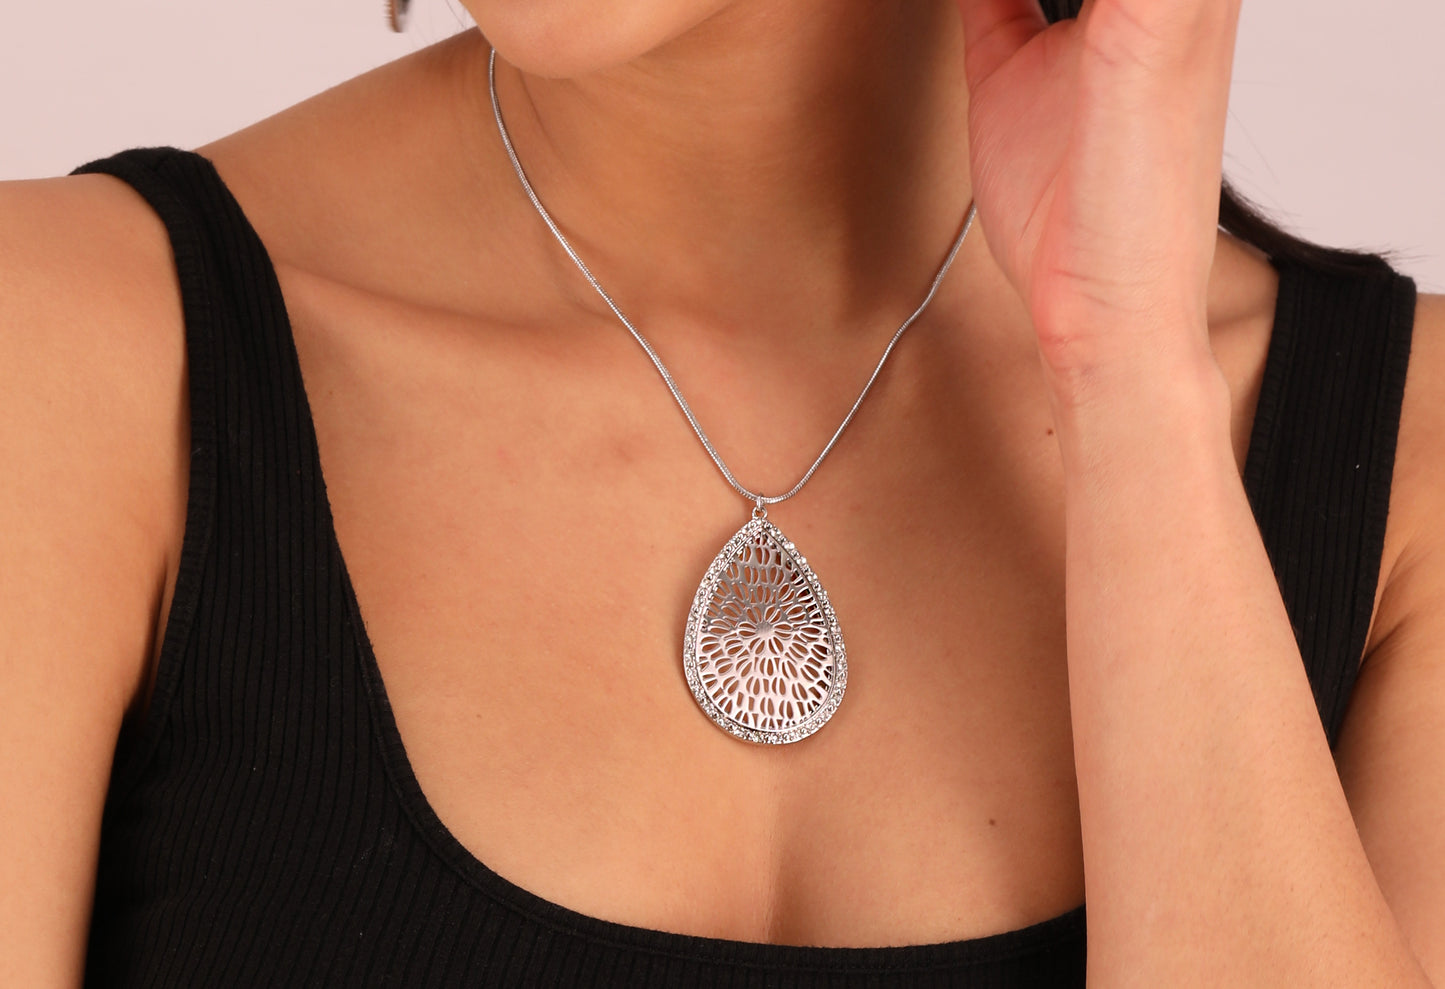 Teardrop Shape Filigree and Crystal Pendant Necklace